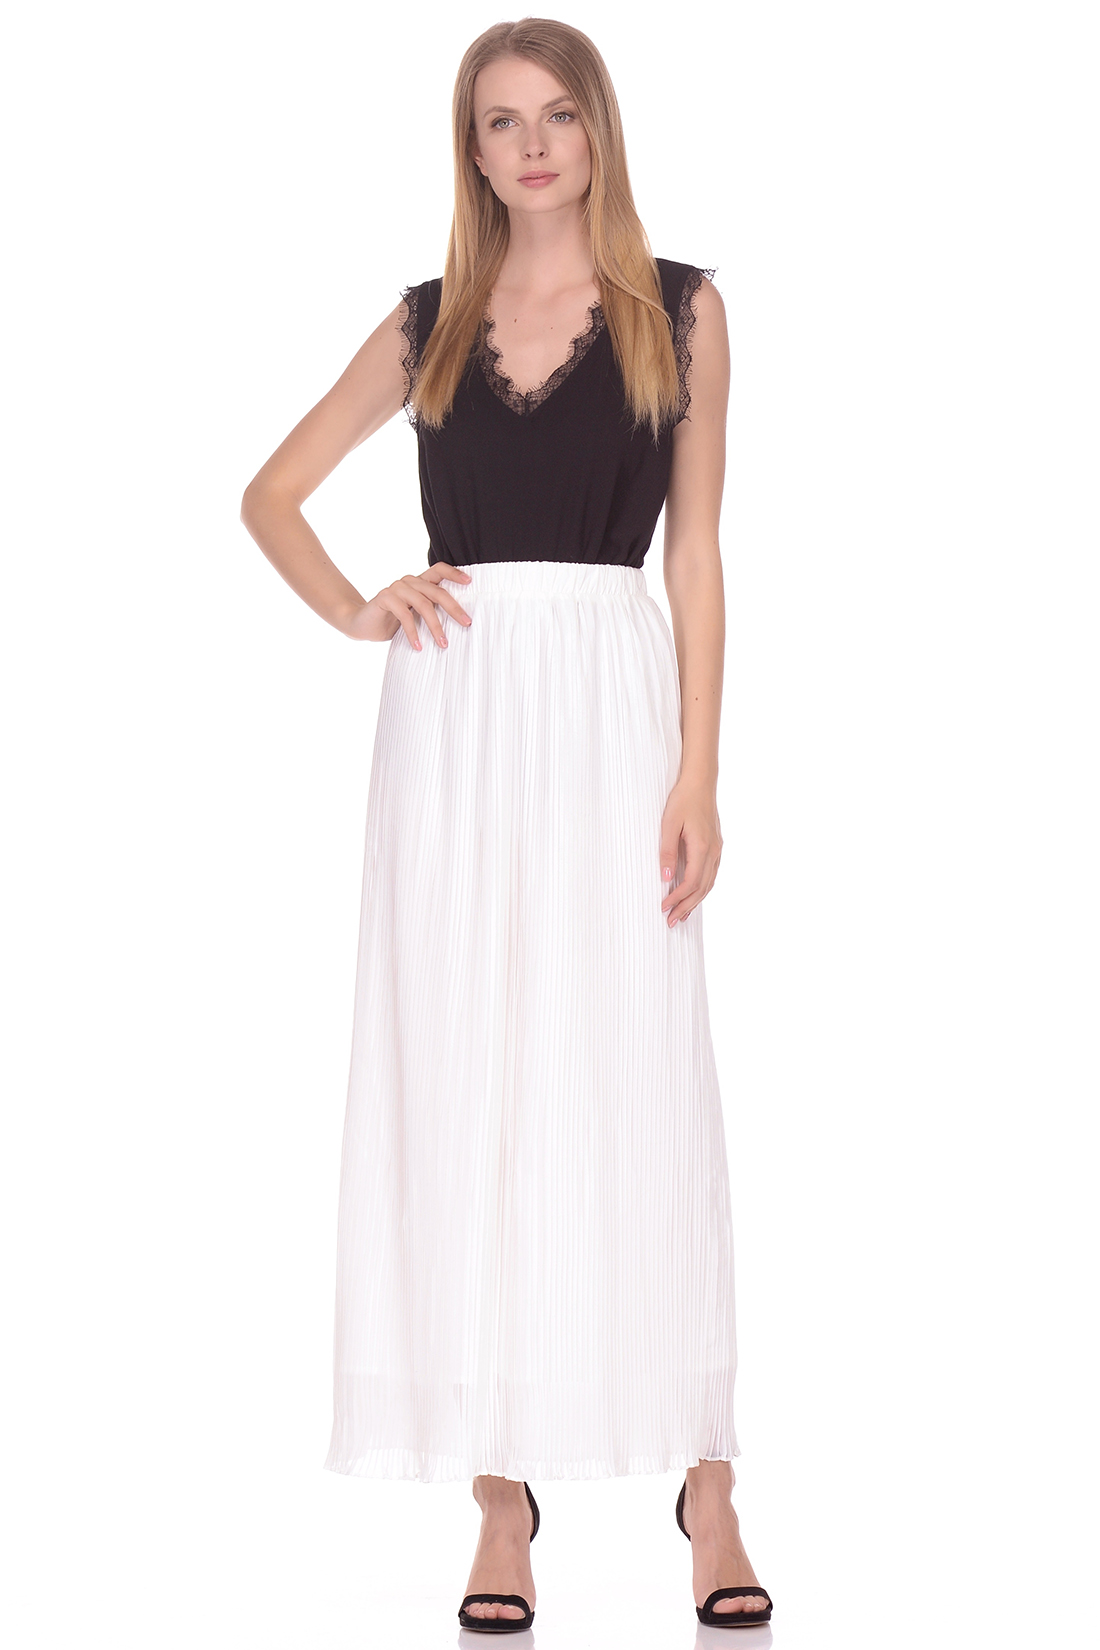 Длинная юбка-гофре (арт. baon B478036), размер XS, цвет белый Длинная юбка-гофре (арт. baon B478036) - фото 1